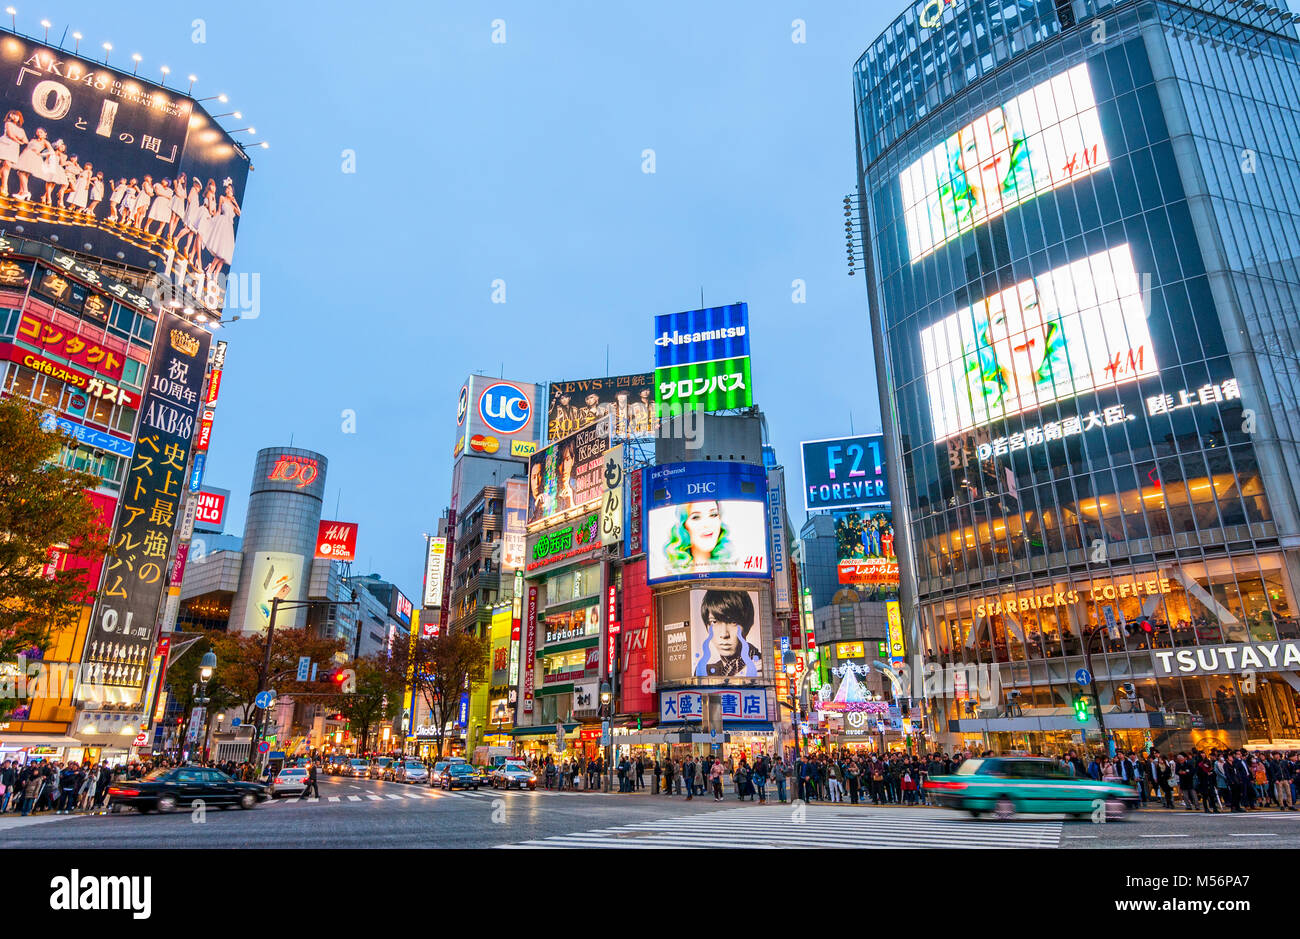 Tokyo Shibuya Crossing Japan Hachiko Square Stock Photo - Alamy